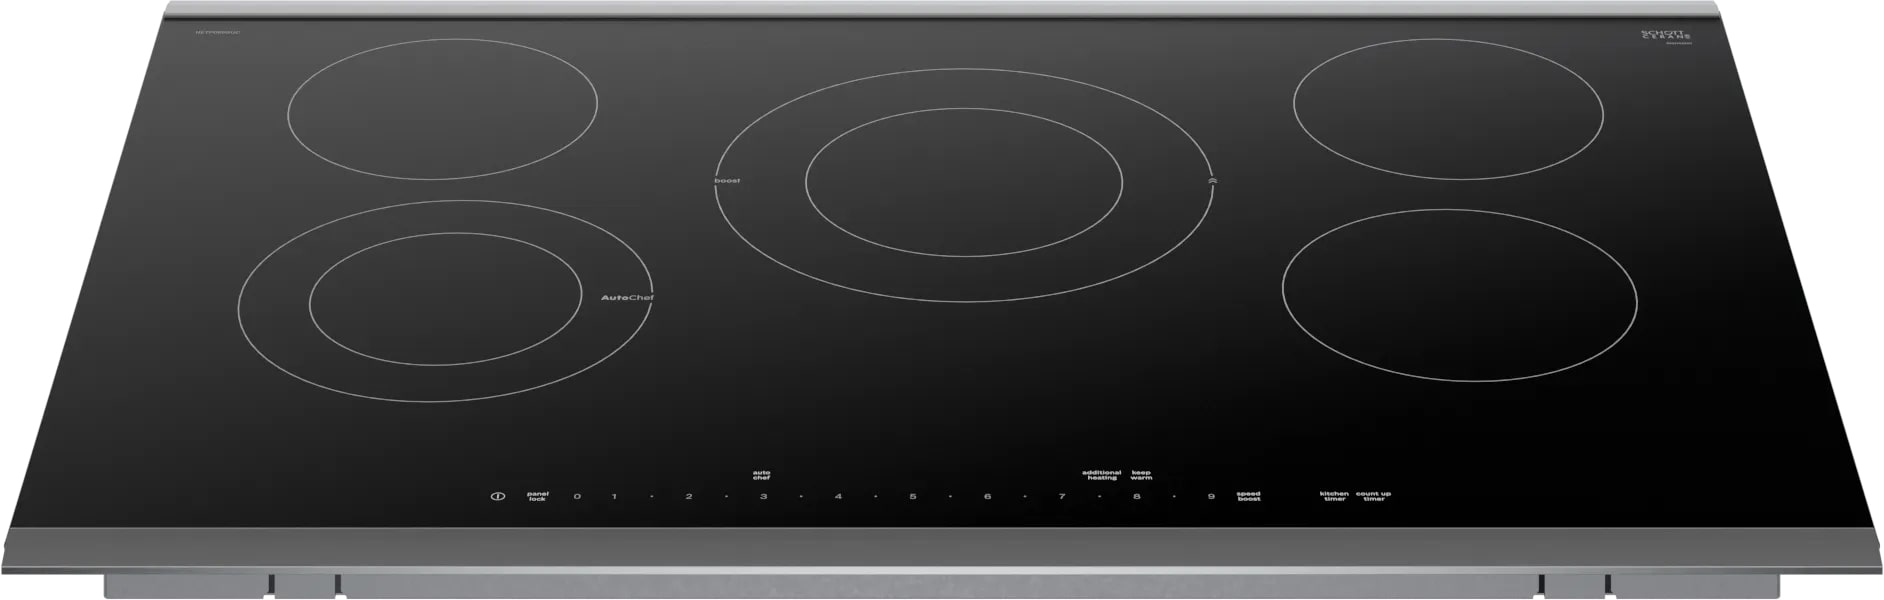 Bosch - 31 inch wide Electric Cooktop in Black - NETP069SUC